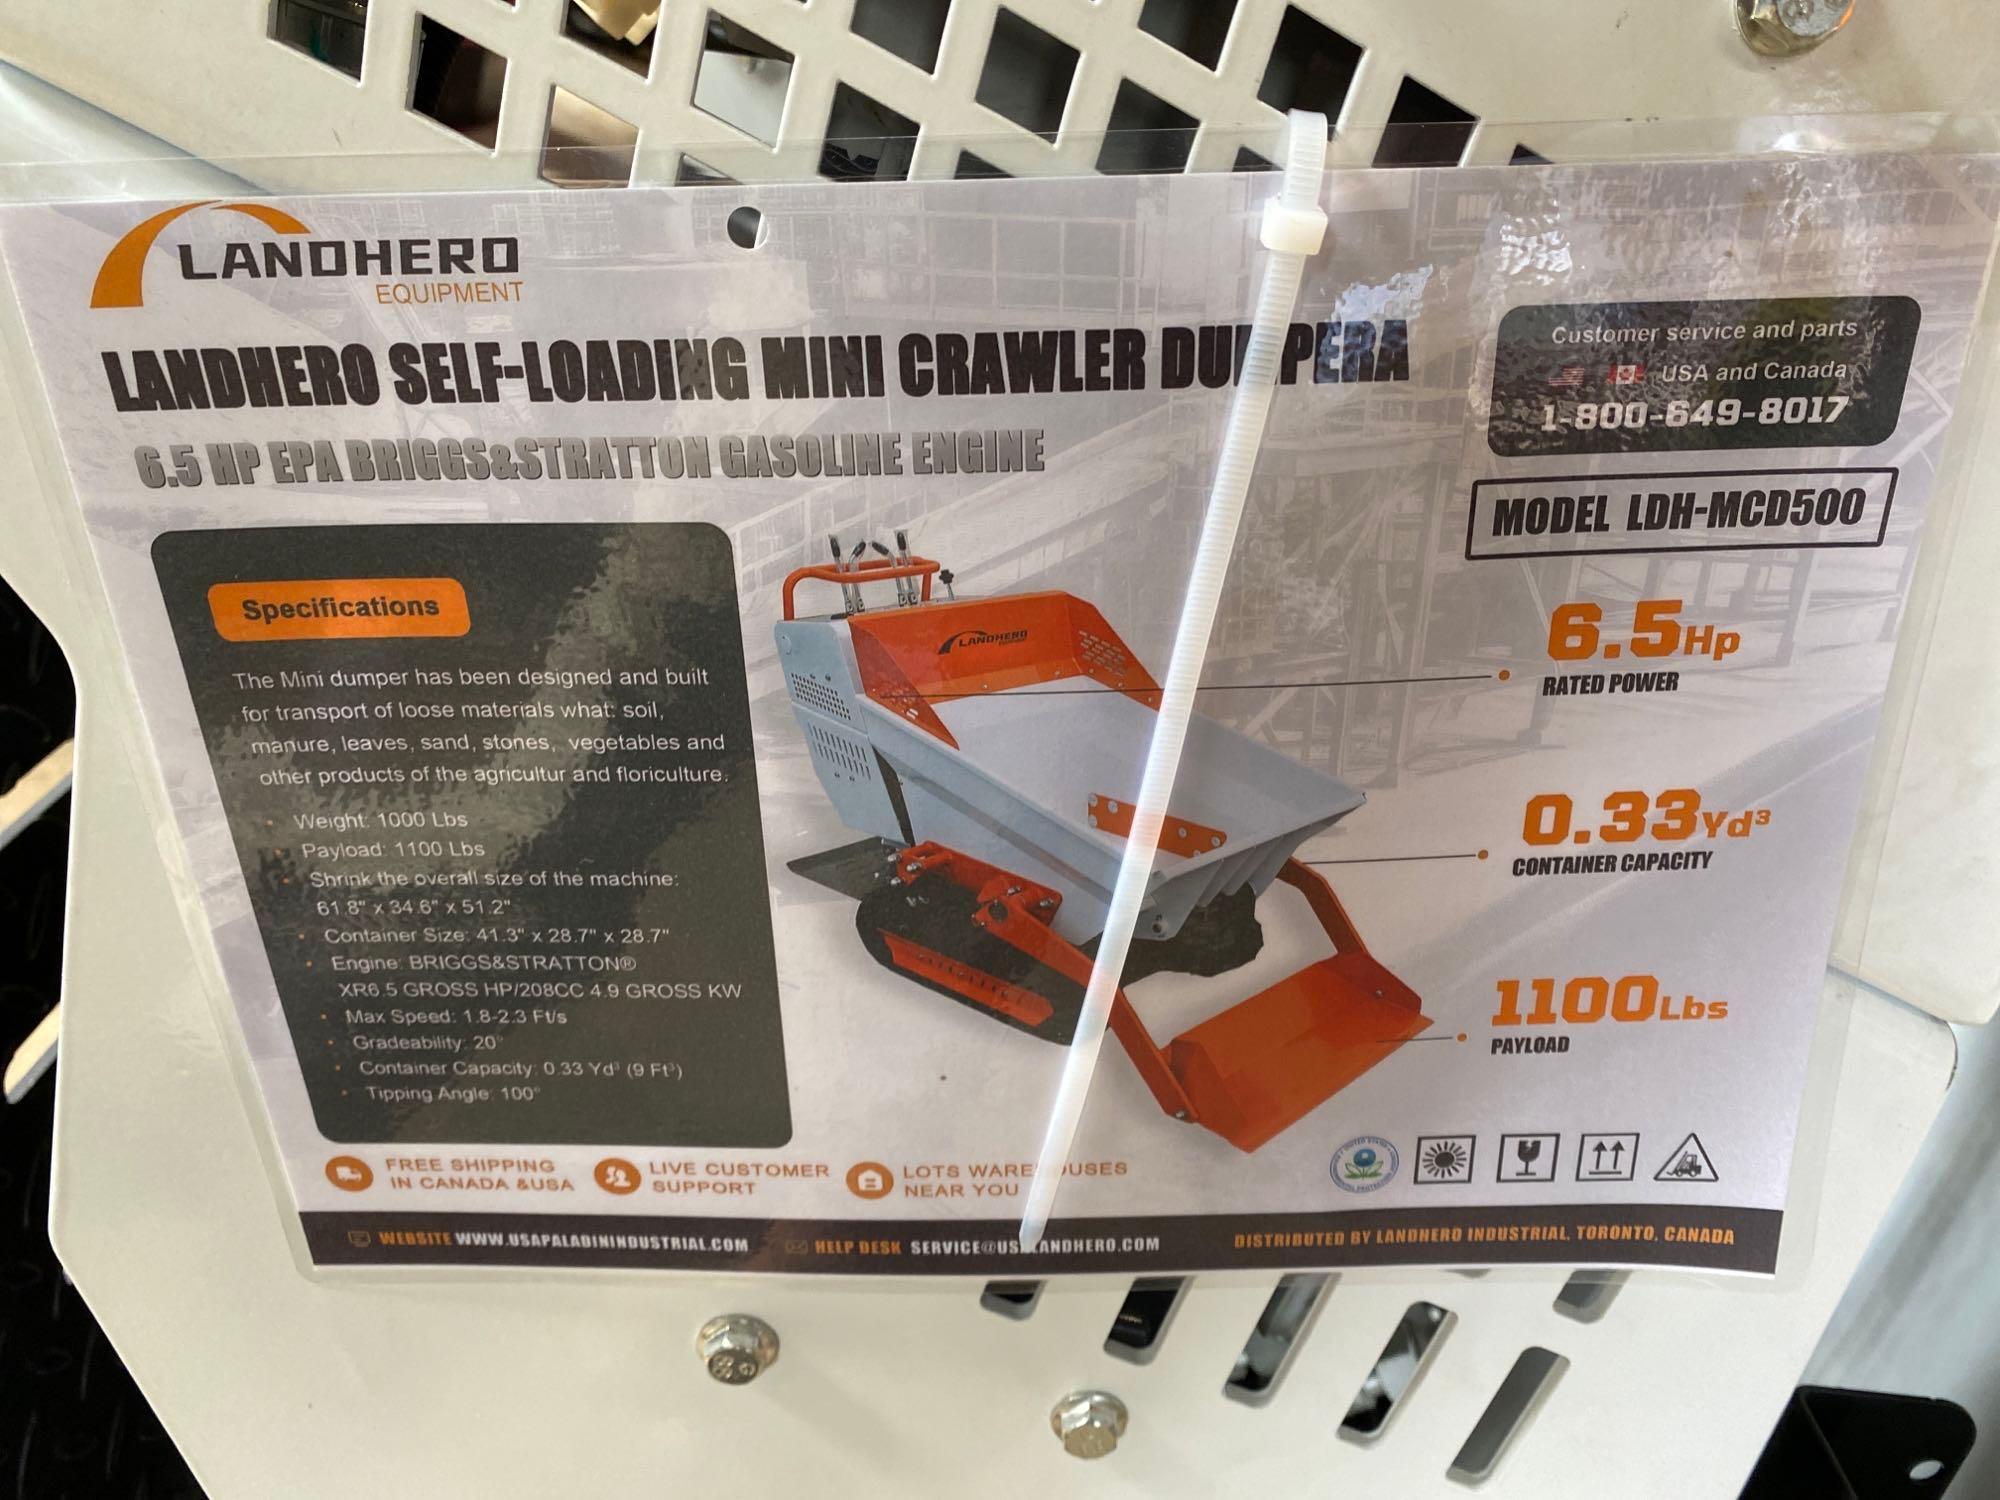 New LandHero Co Self Loading Mini Crawler/Dumper Model LDH-MCD500